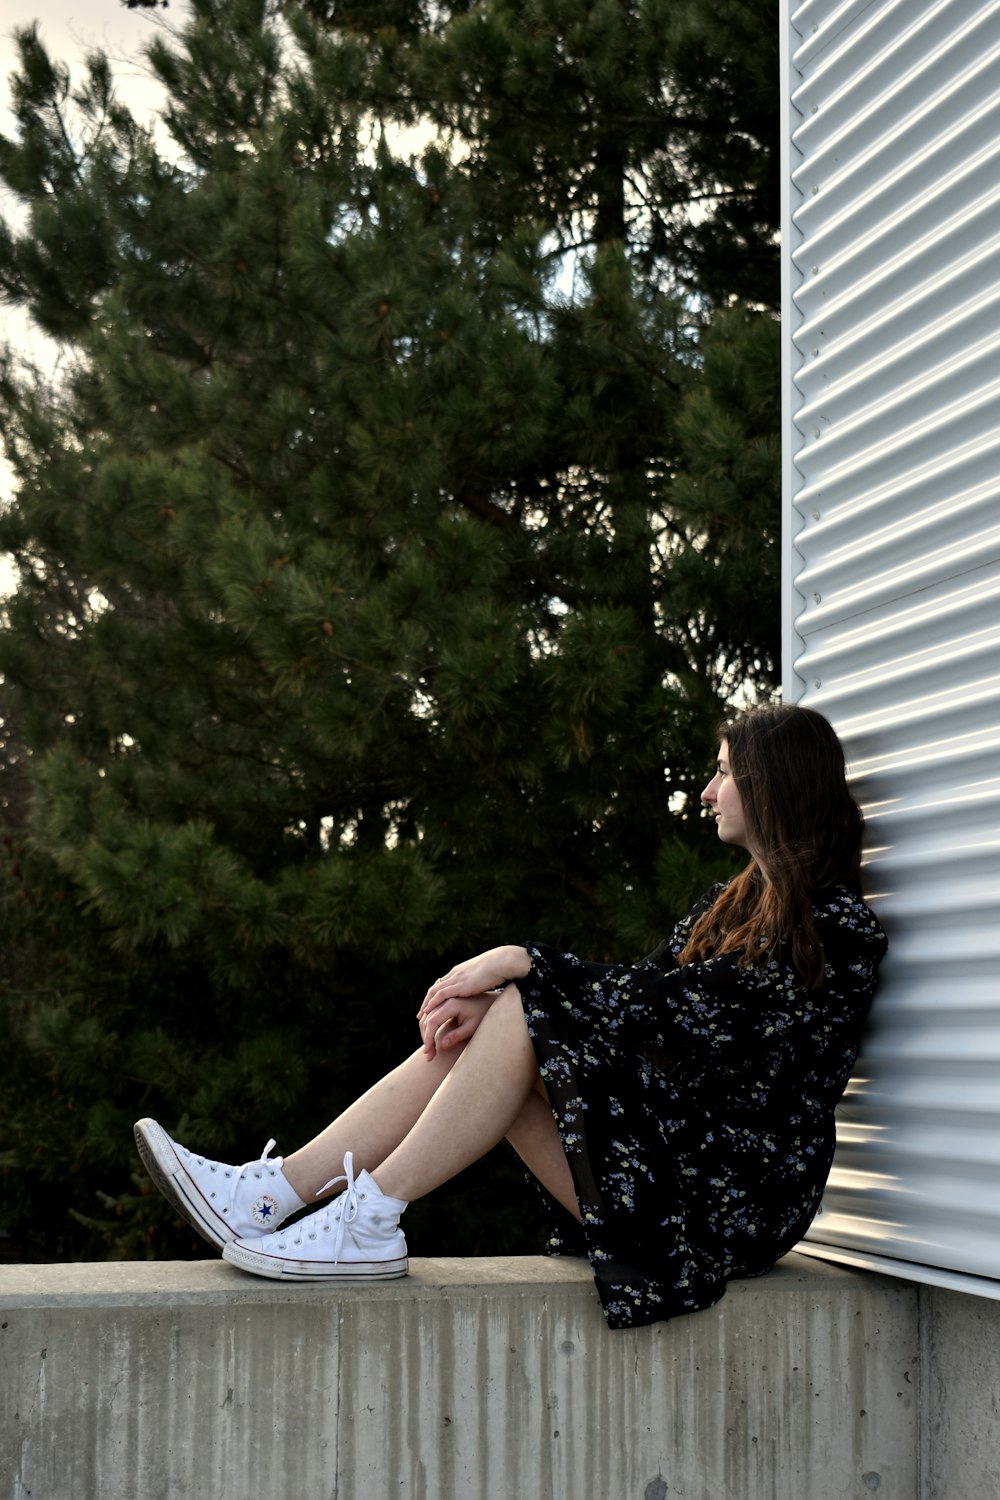 a woman is sitting on a concrete ledge